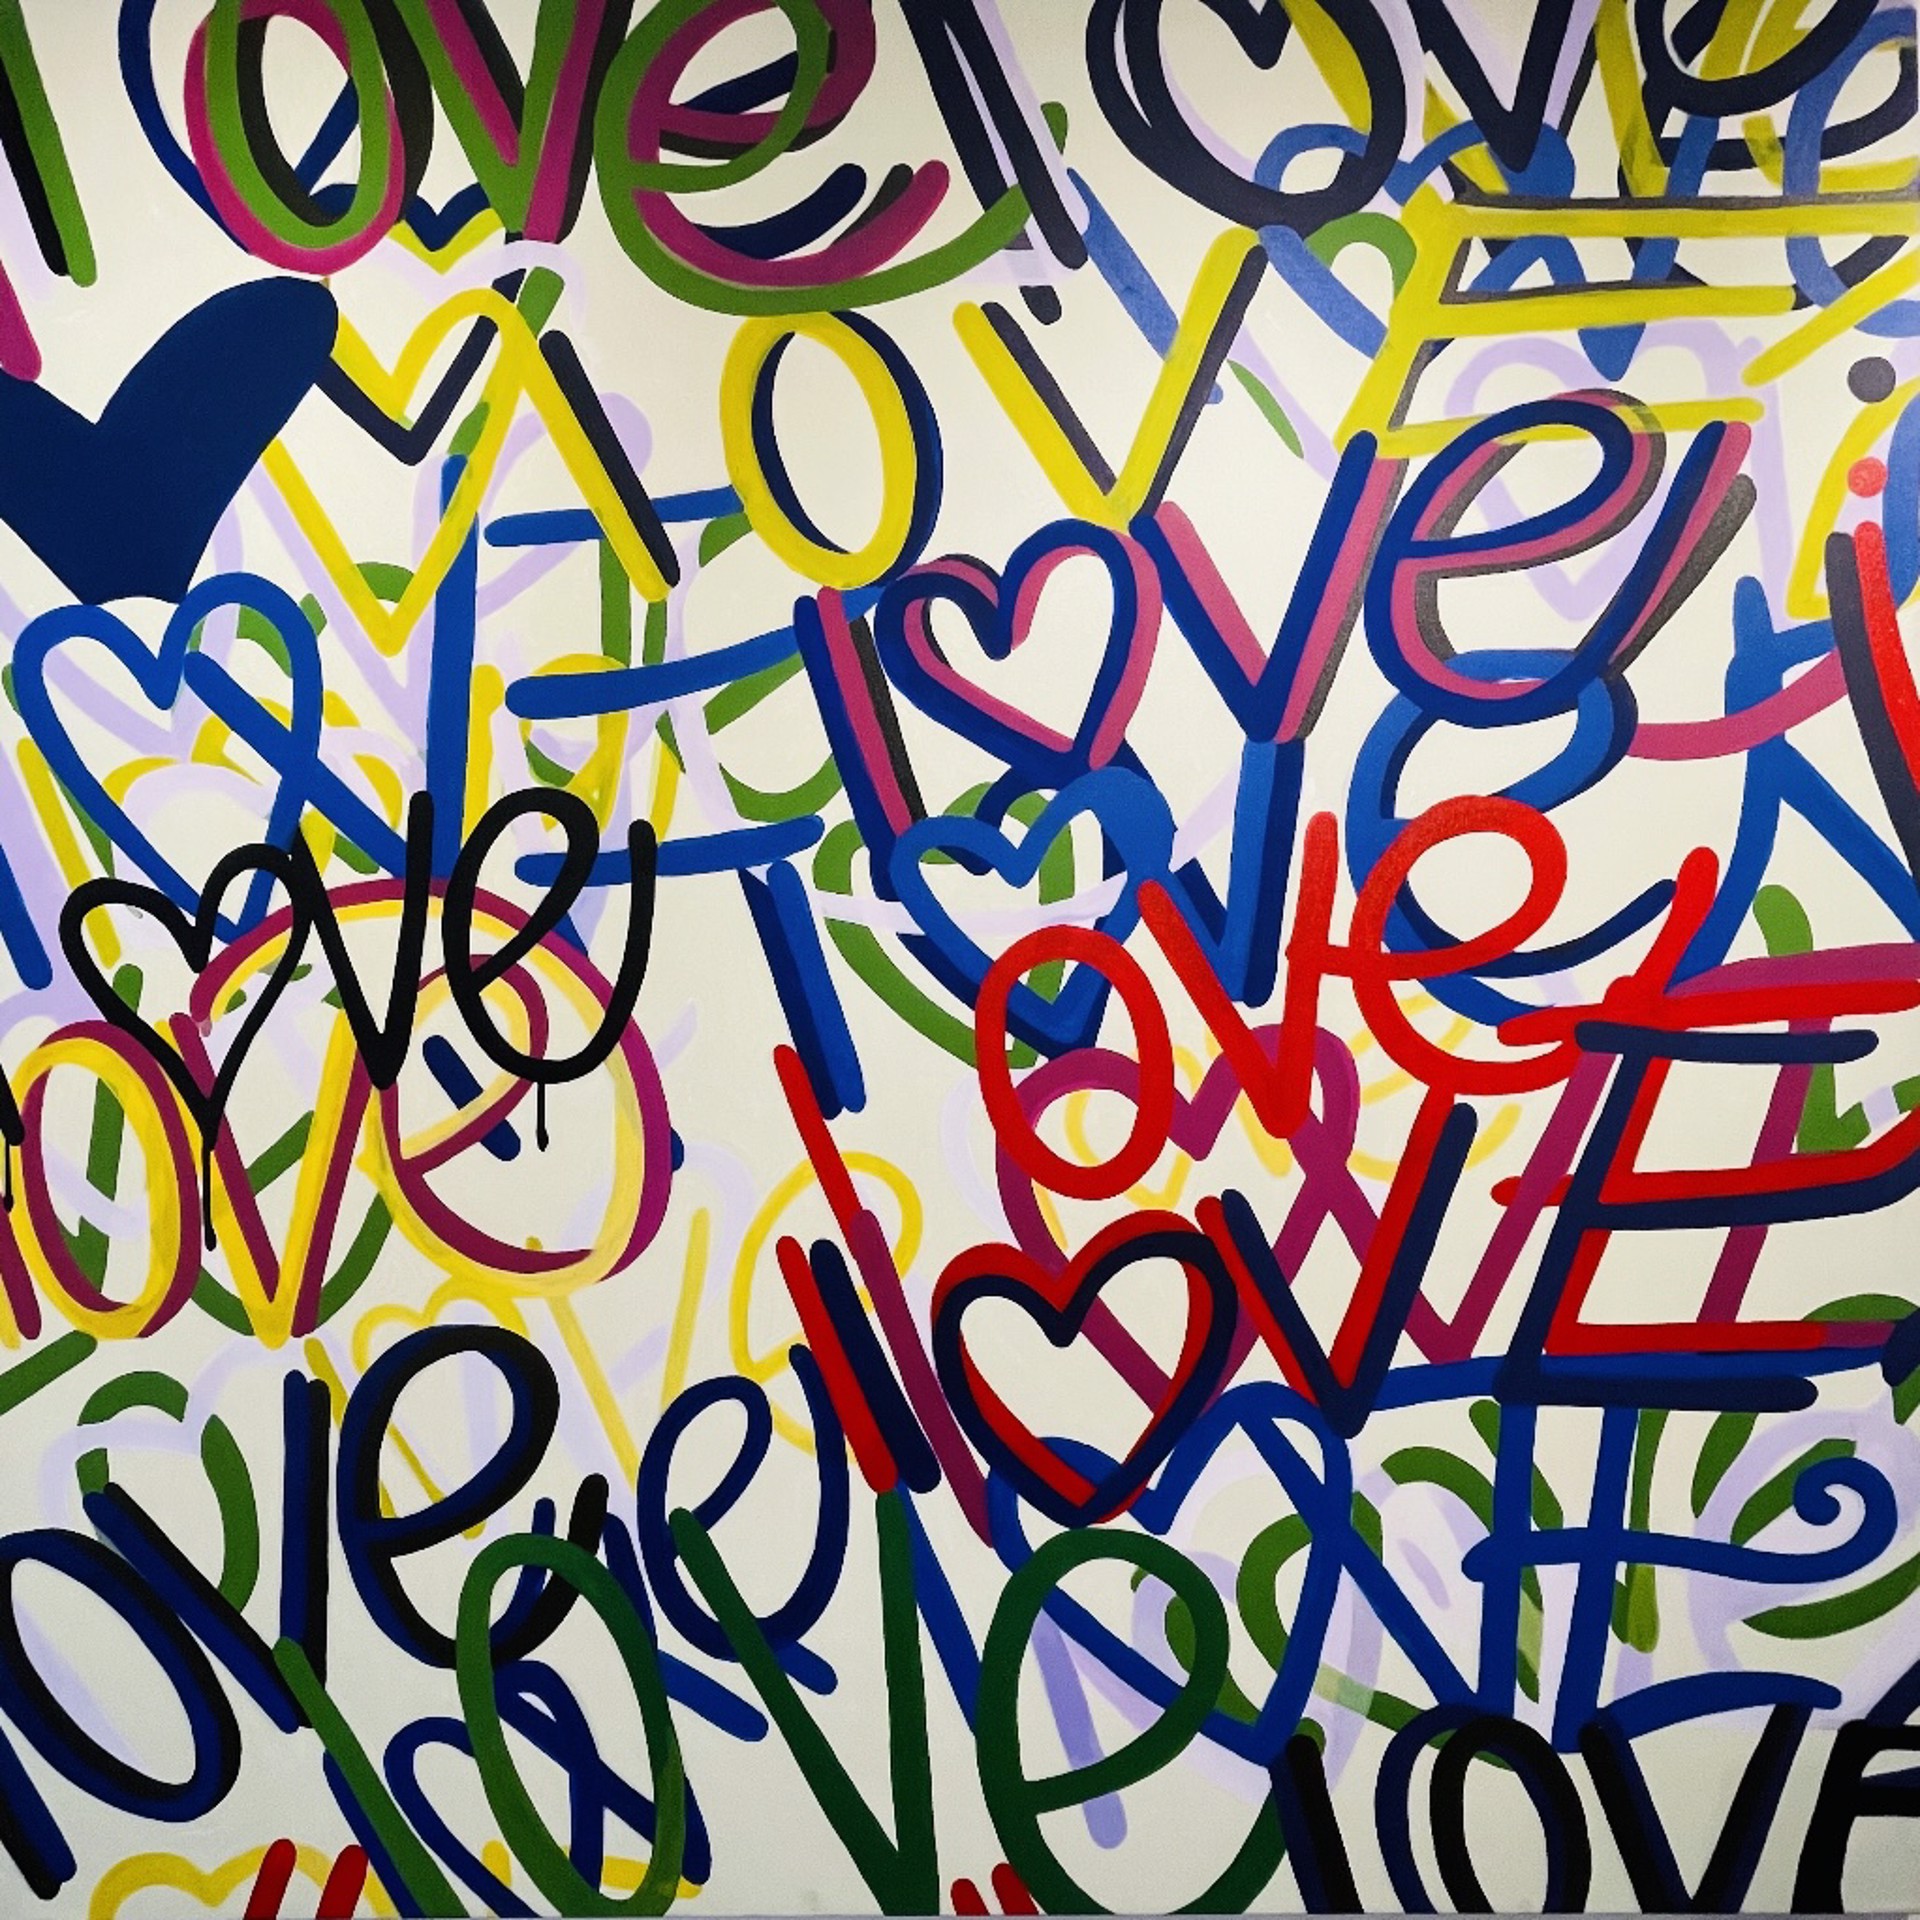 Love Love Love by BuMa Project